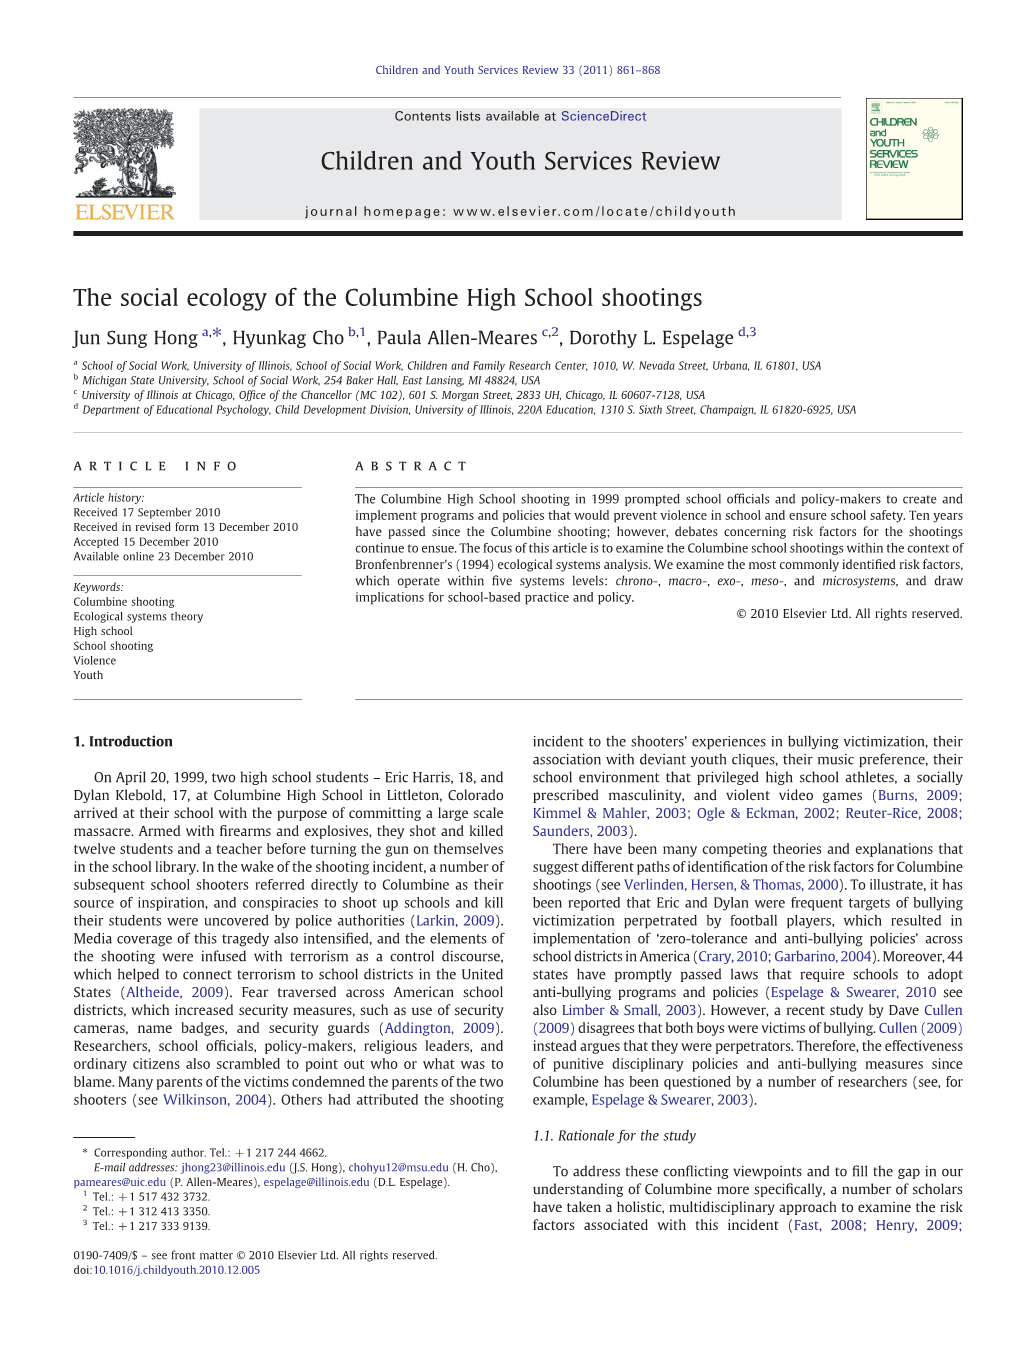 The Social Ecology of the Columbine High School Shootings.Pdf